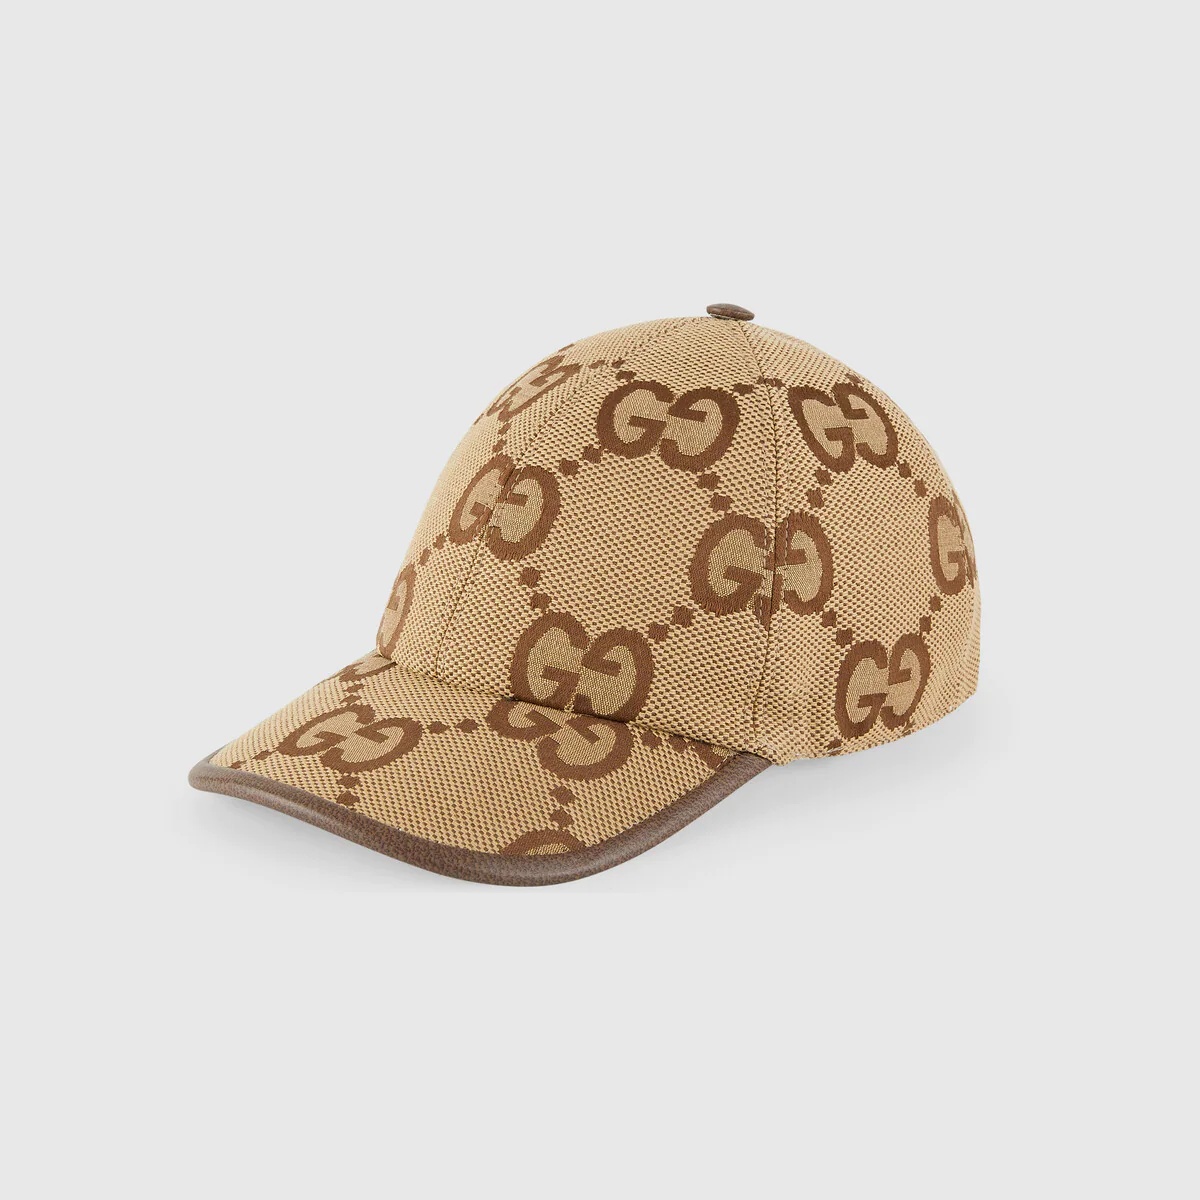 Jumbo GG canvas baseball hat - 1